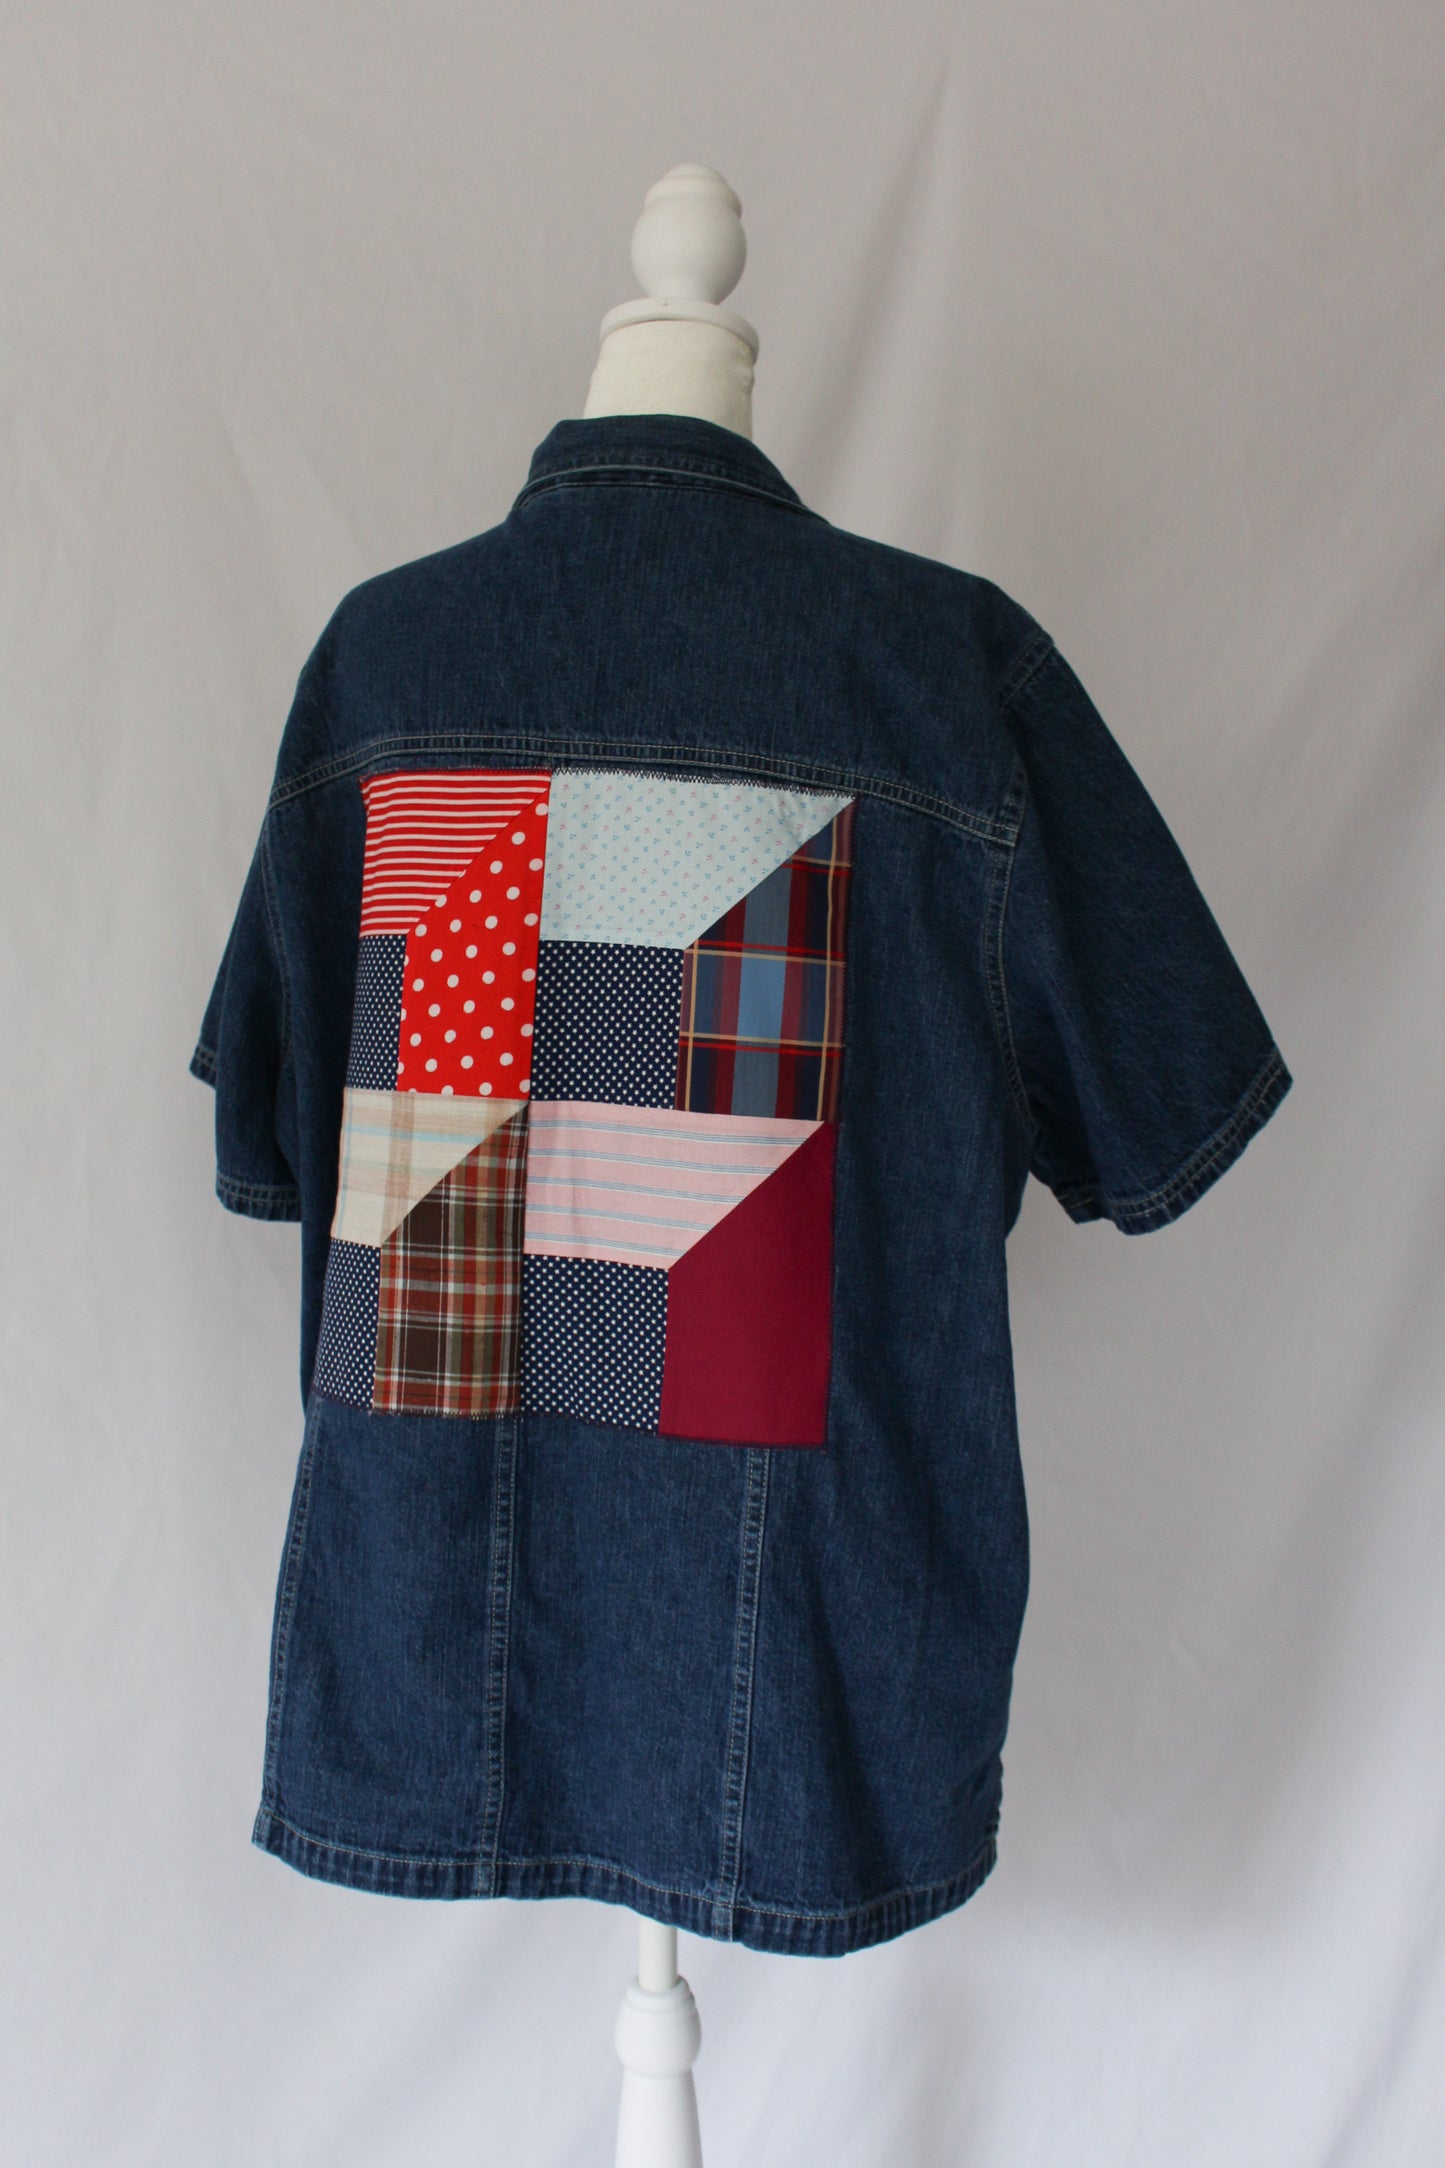 denim quilt block shirt, red white and blue quilt block 